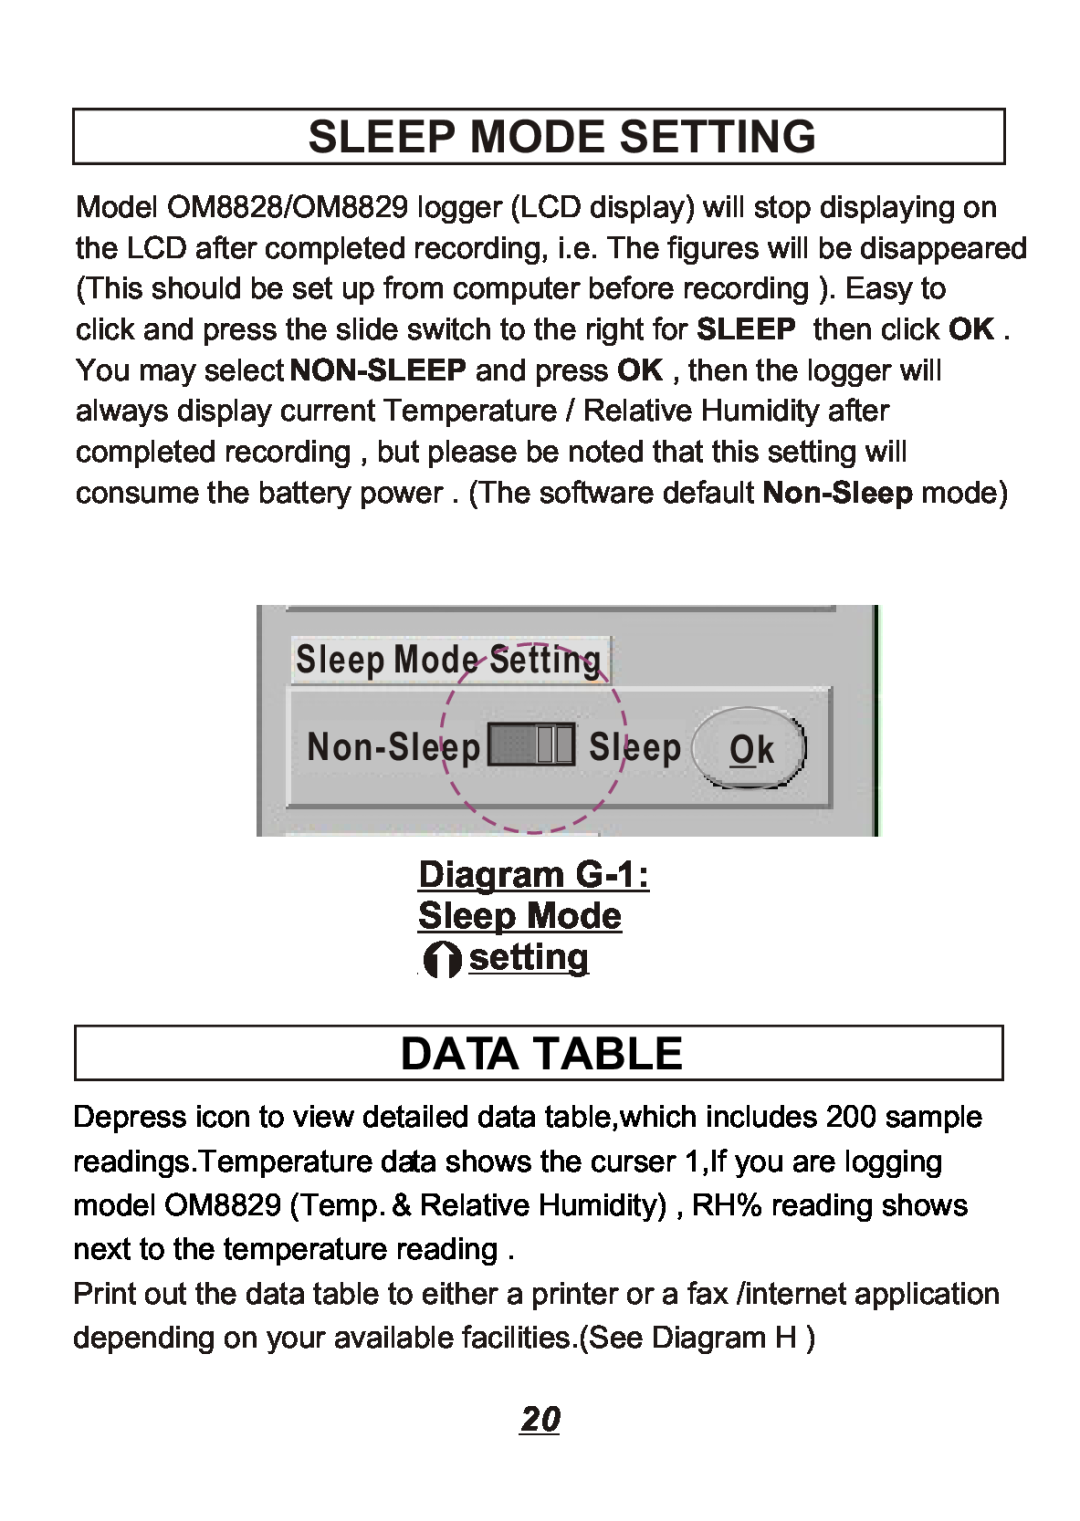 Omega Engineering OM88128, OM8800D Sleep Mode Setting, Data Table, Diagram G-1 Sleep Mode setting, Non-Sleep, Sleep Ok 